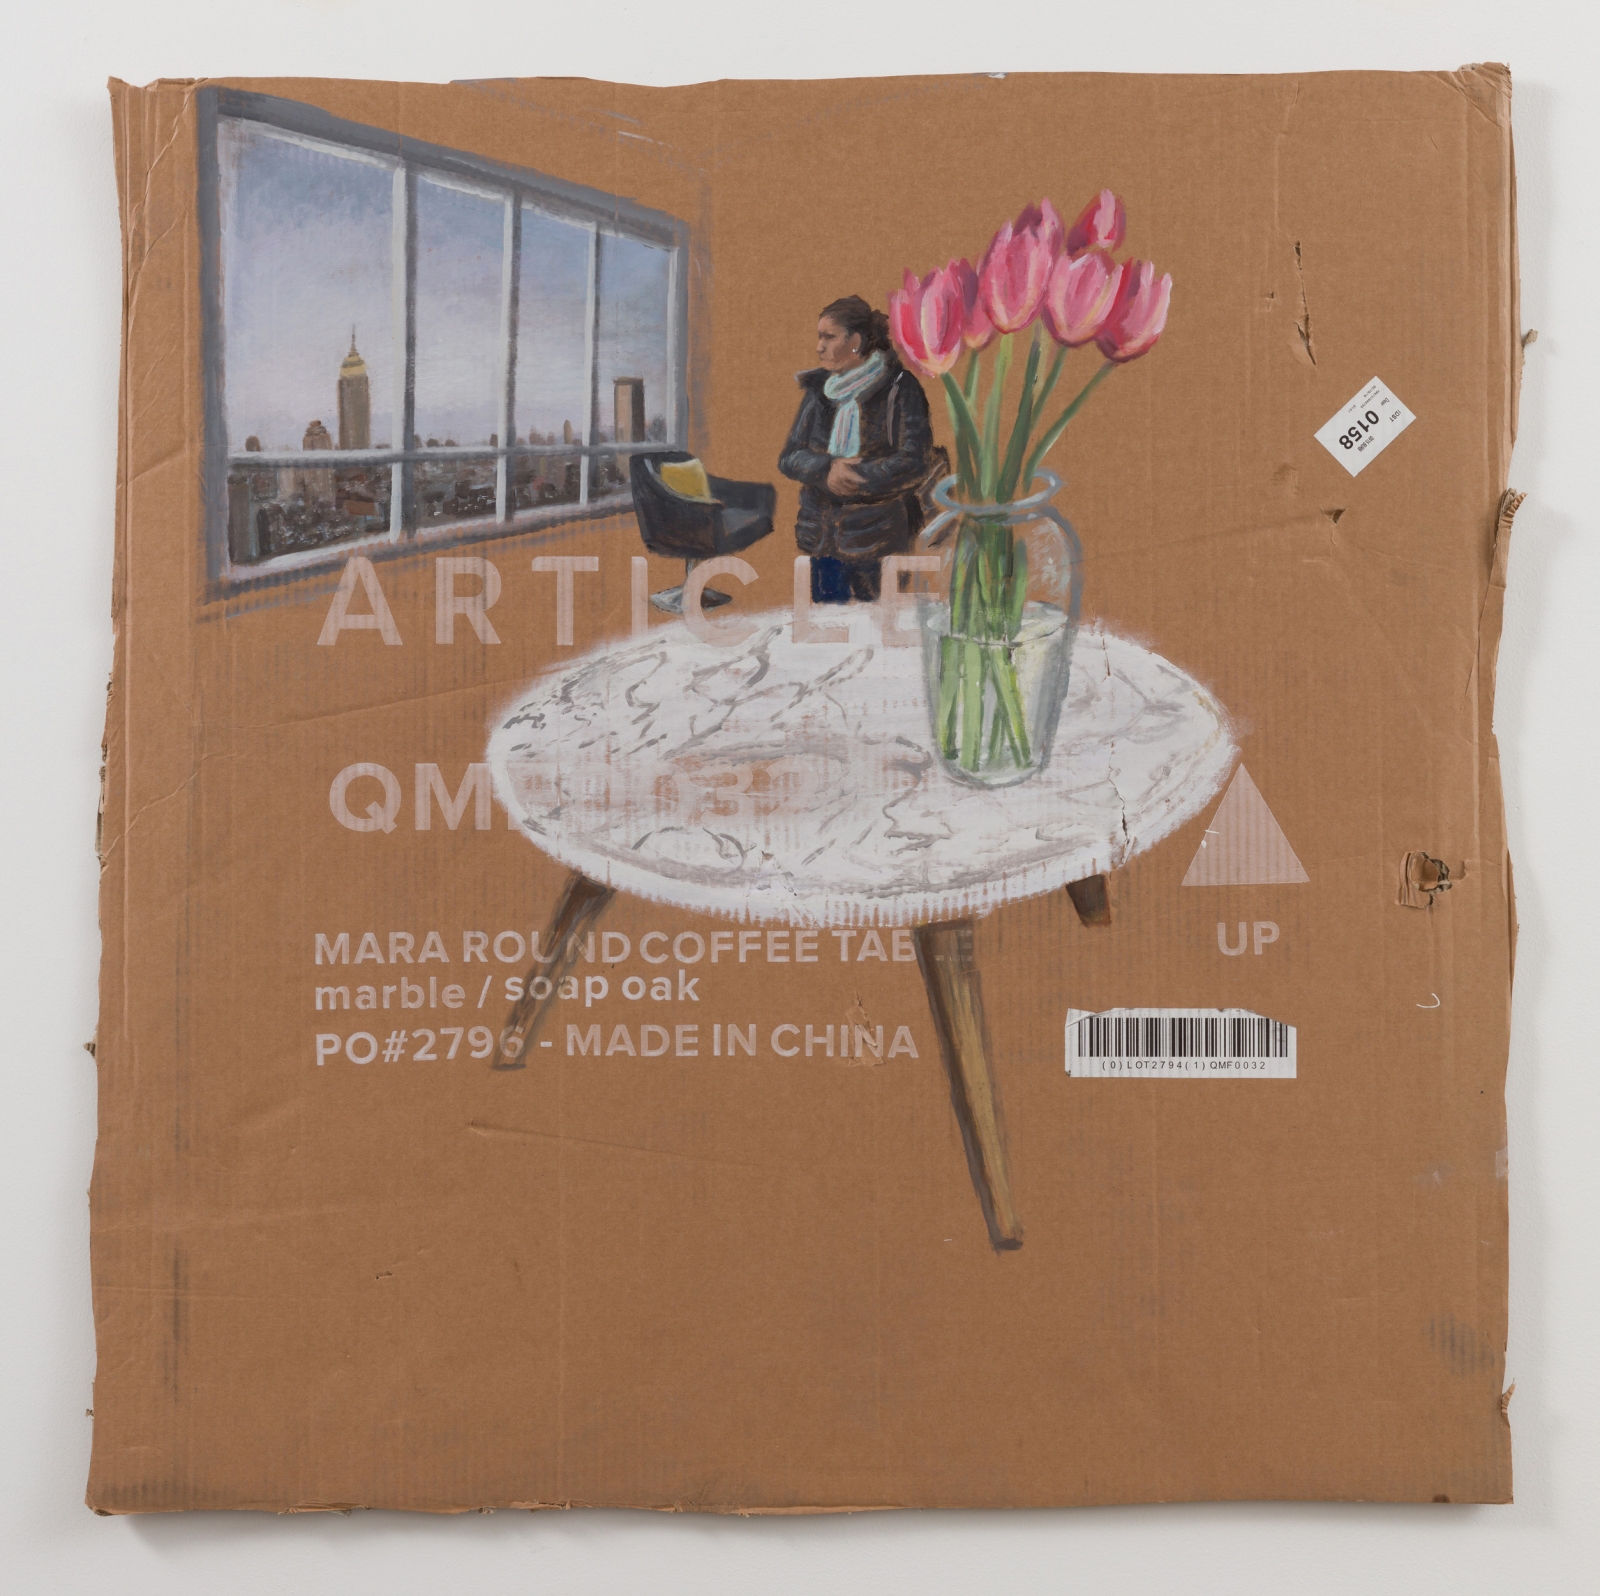 Ramiro Gomez
A Woman Waiting (Hell&rsquo;s Kitchen), 2018
acrylic on cardboard
36 x 36 in.
91.4 x 91.4 cm